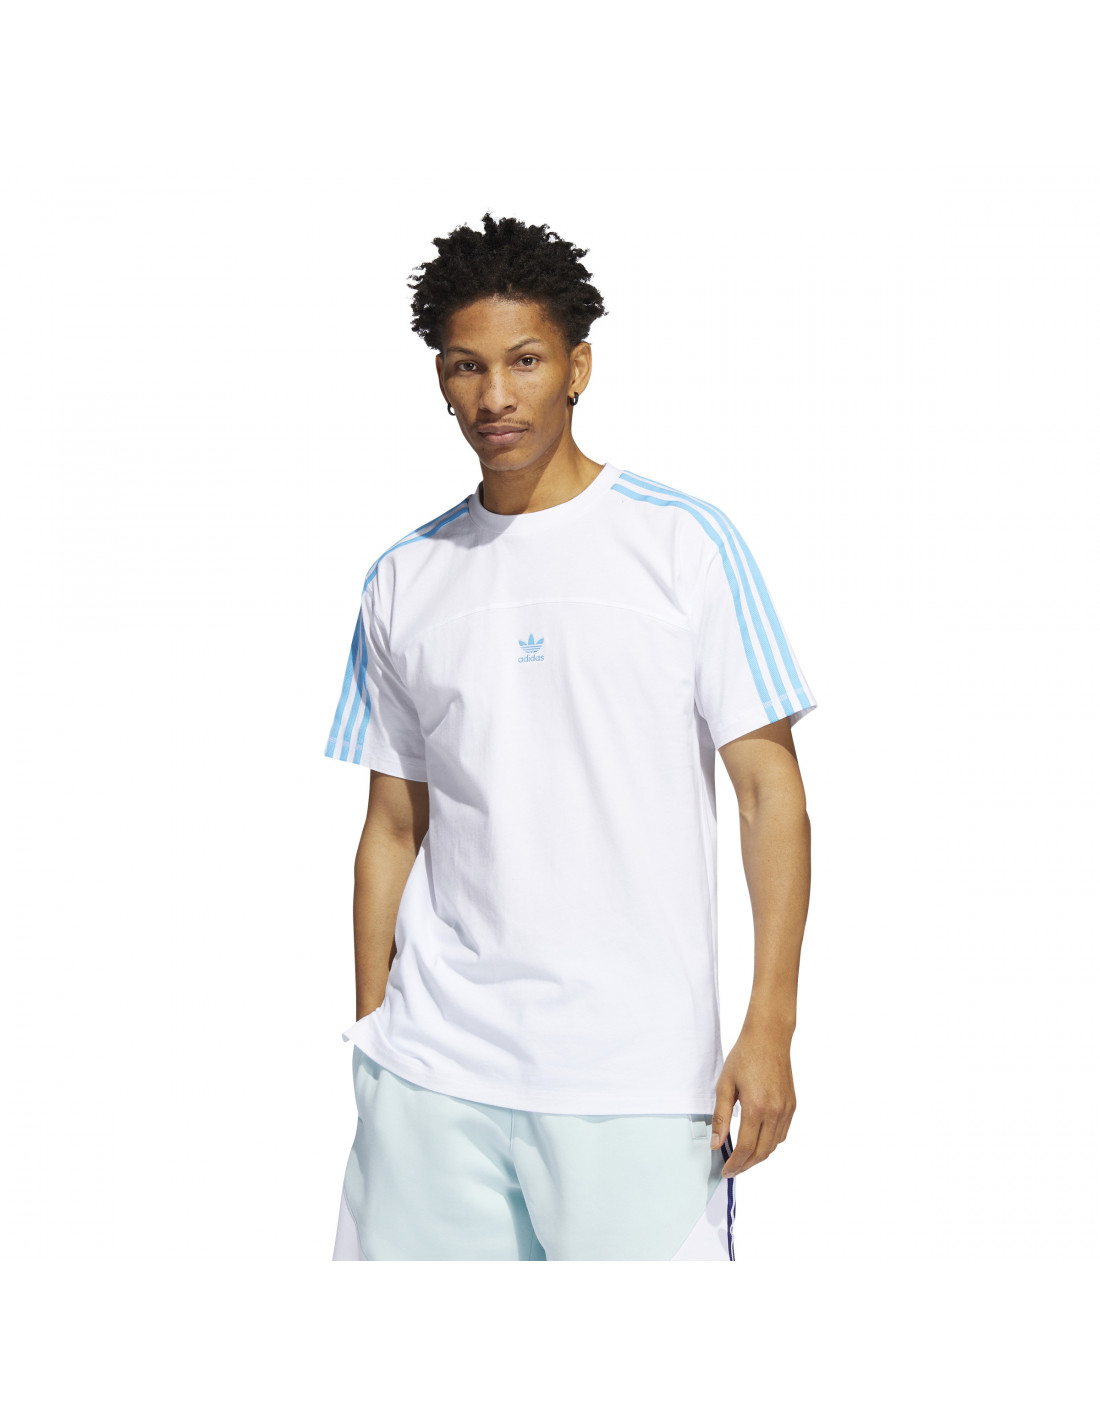 Camiseta adidas Originals Blocked 3 Stripes Tamaño ropa chico S Blanco